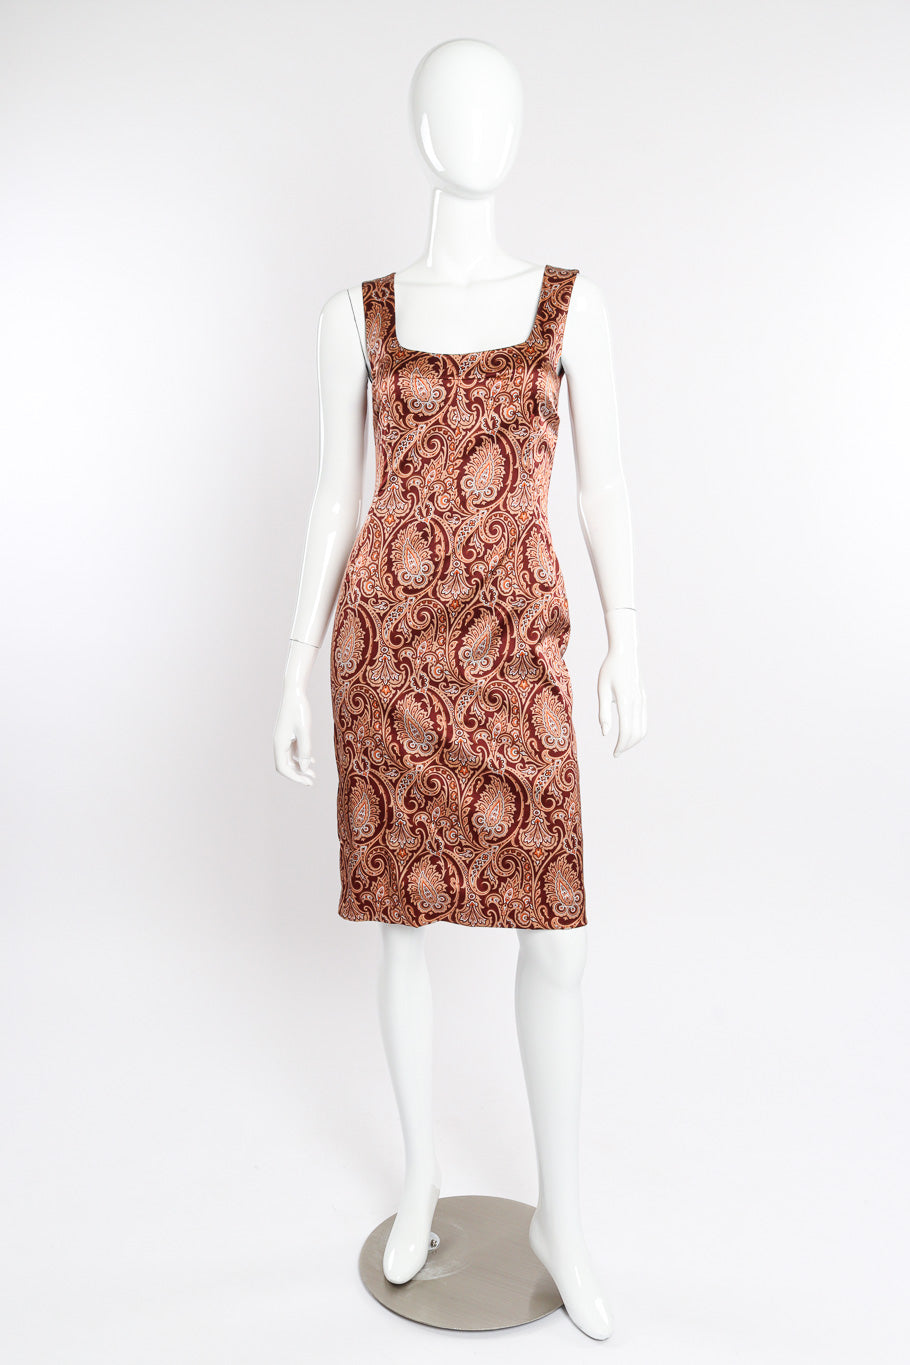 Sheath dress by Dolce & Gabbana on mannequin @recessla